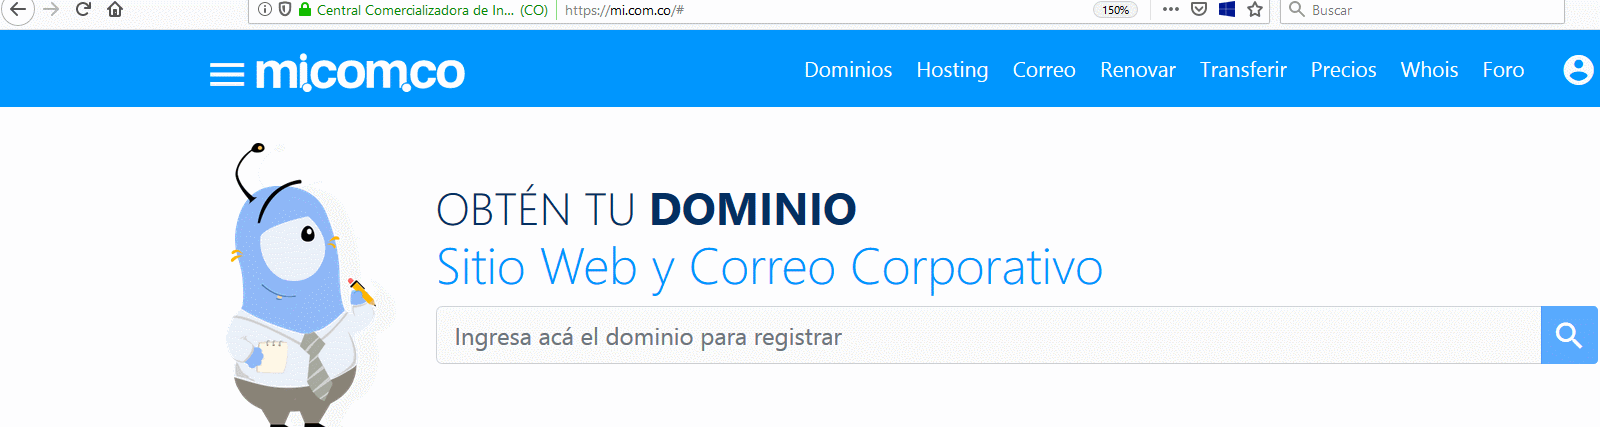 Proveedor de dominio, hosting, correo corporativo.